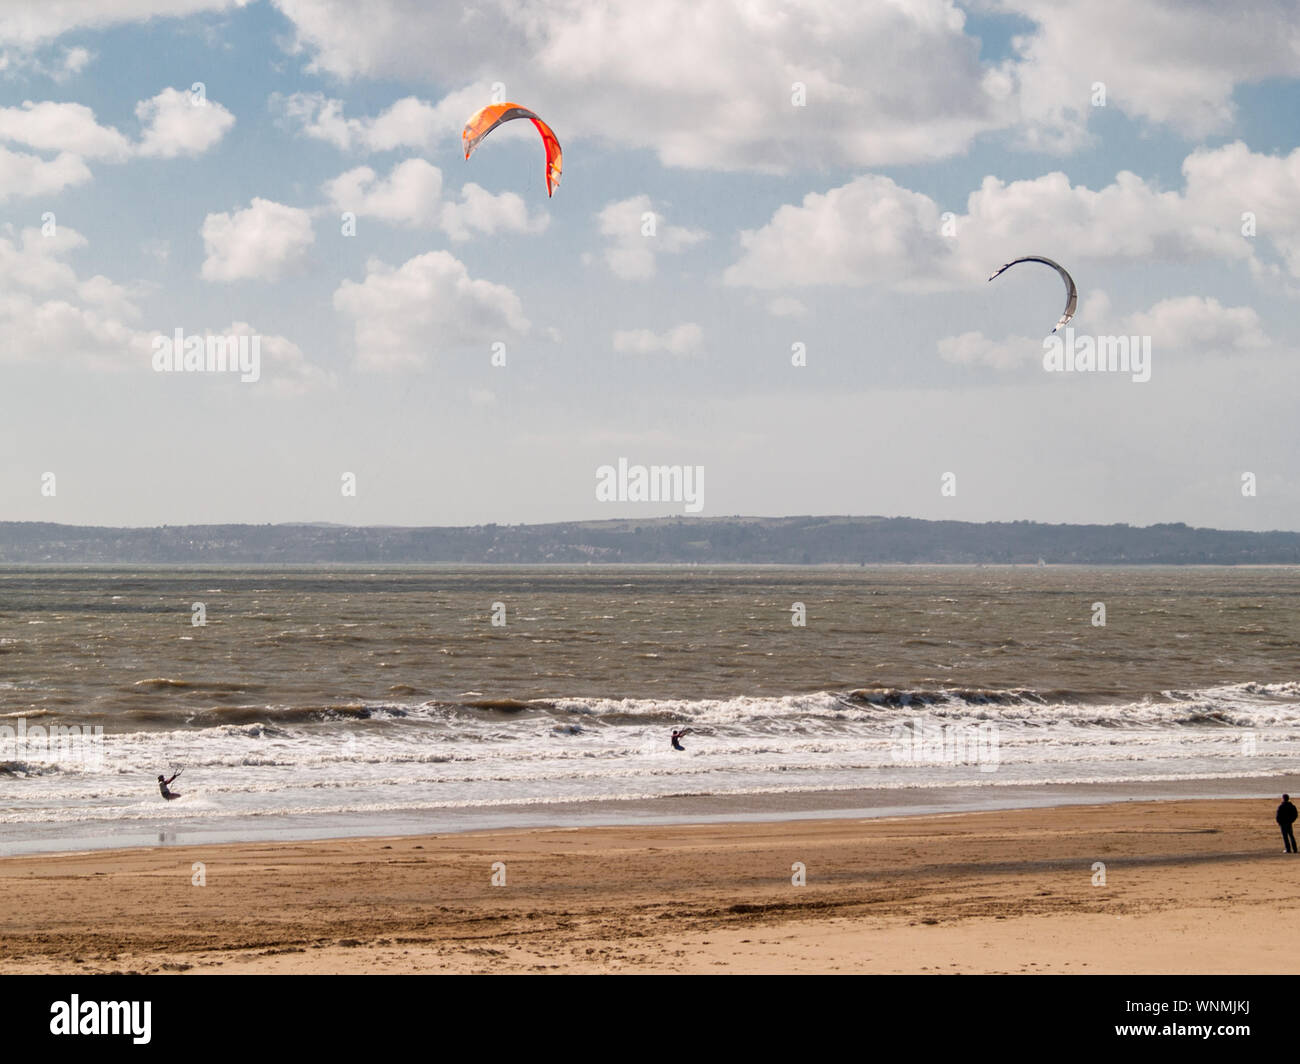 Kitesurfing at Aberavon Beach, Port Talbot, Swansea bay, Wales, UK. Stock Photo